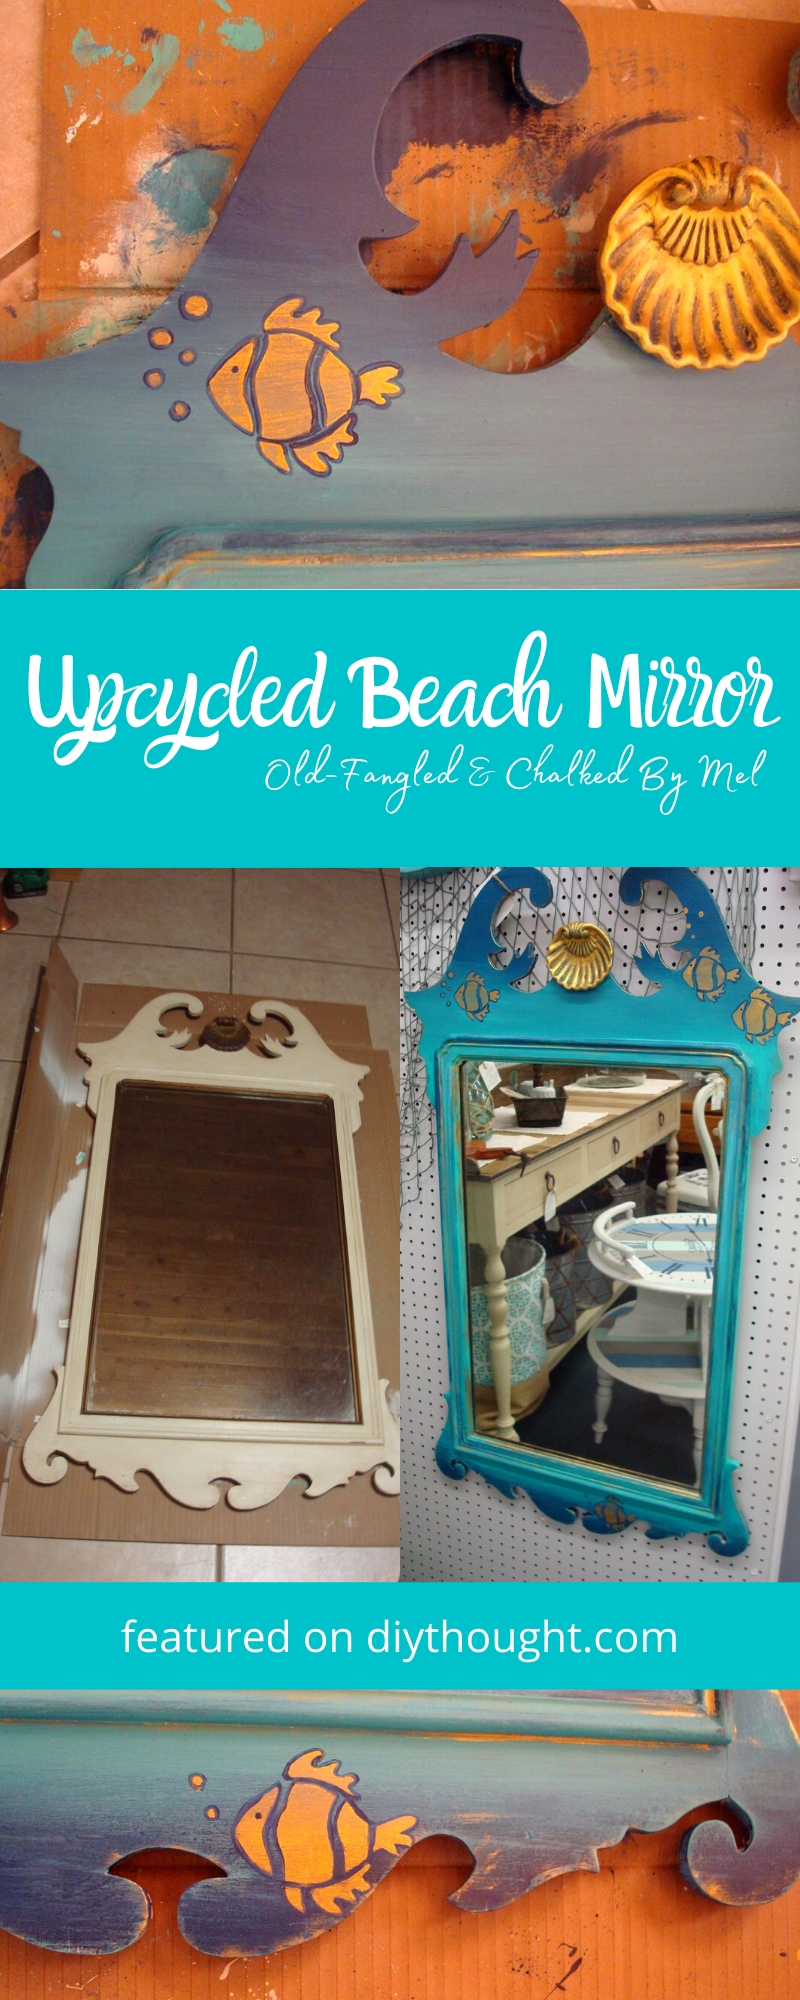 upcycled beach mirror DIY